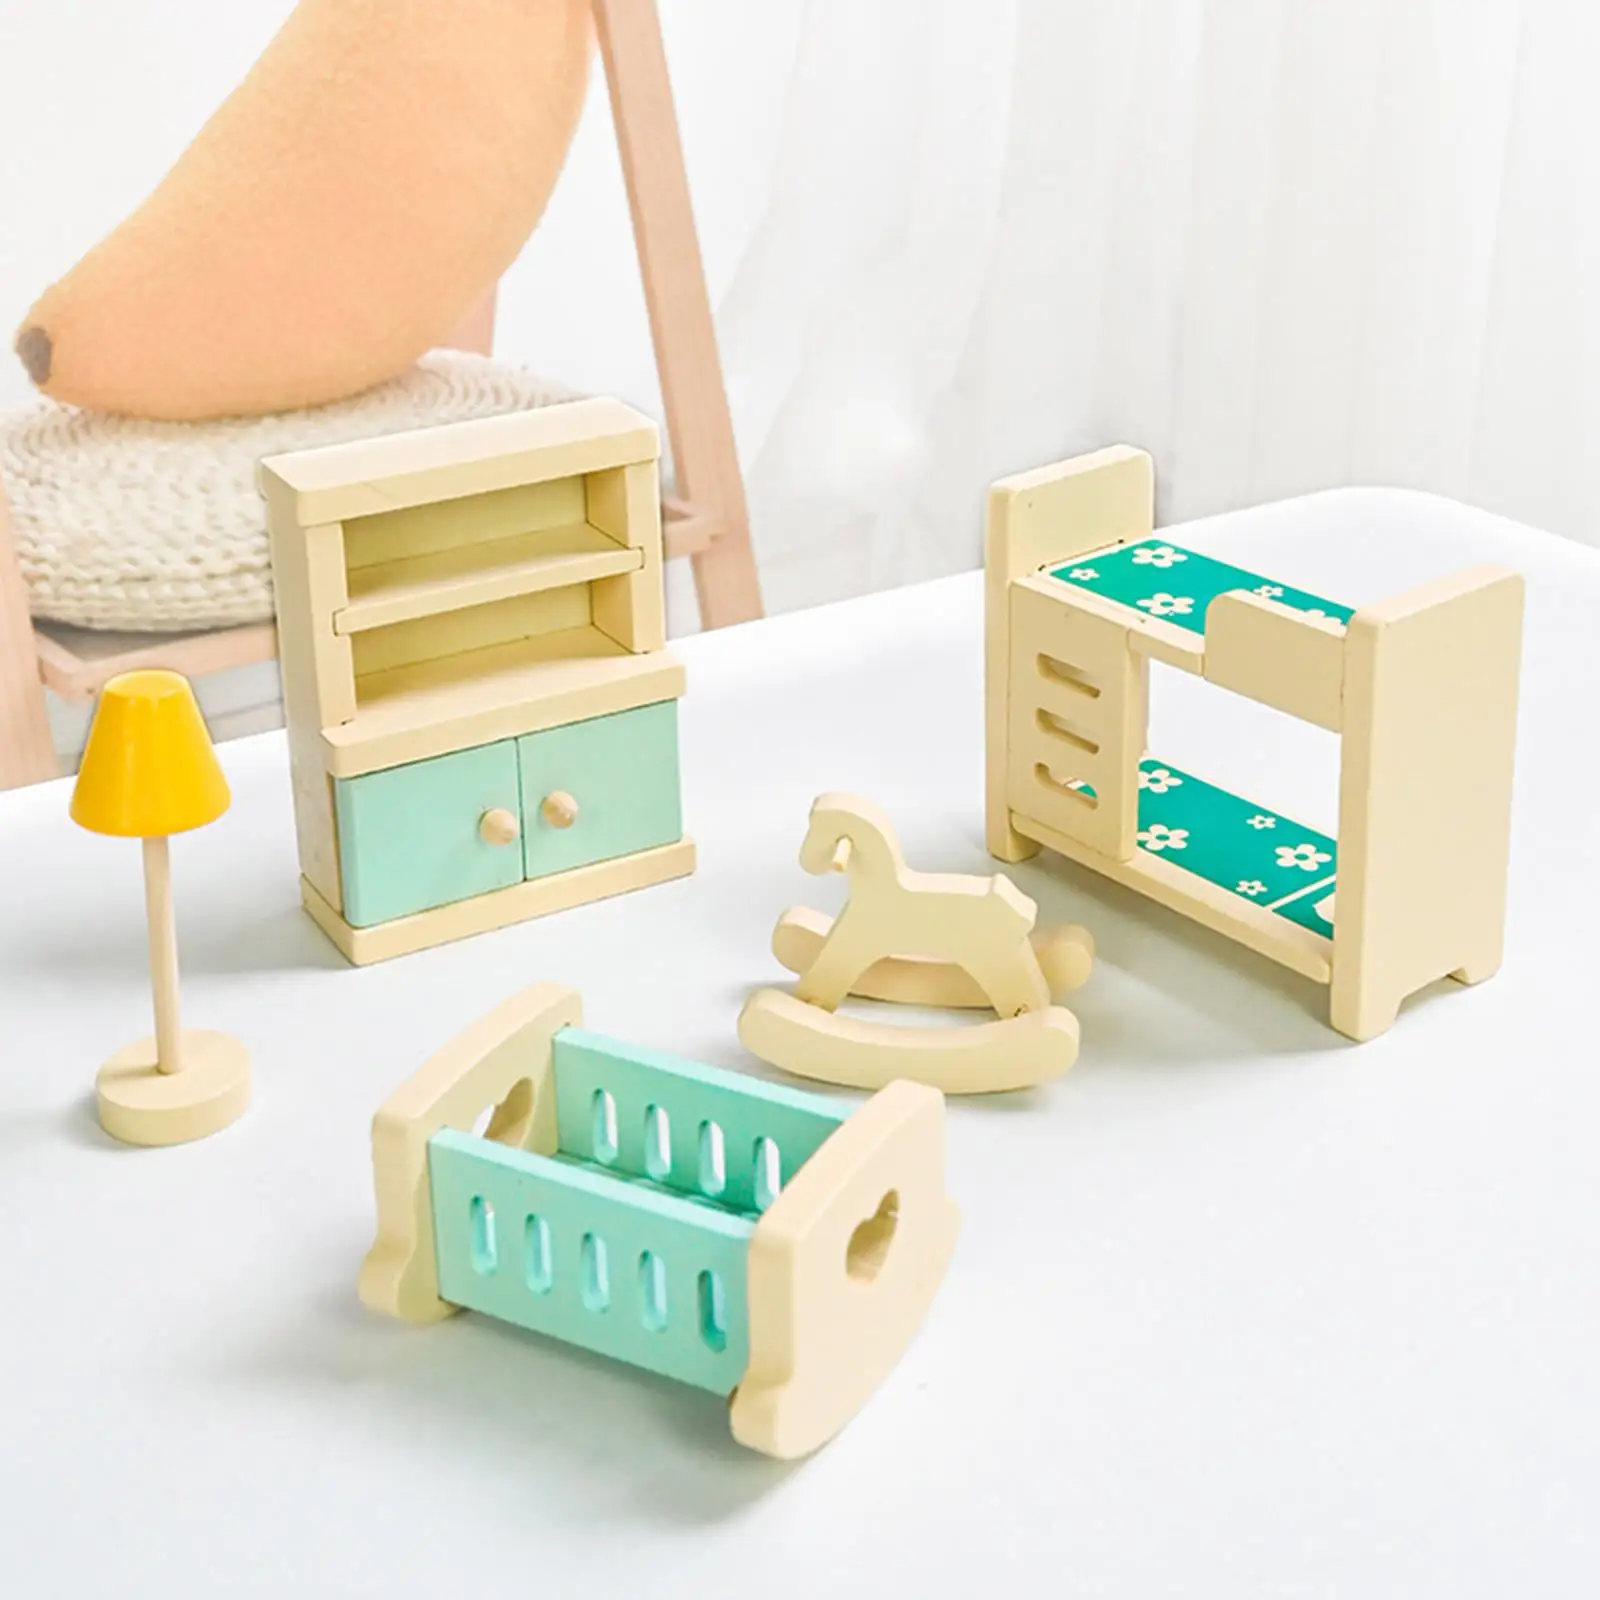 30x Dollhouse Wood Furniture Set Miniature Play Scene Model Pretend Play Furniture Toy Dollhouse Furniture Playset for Decor